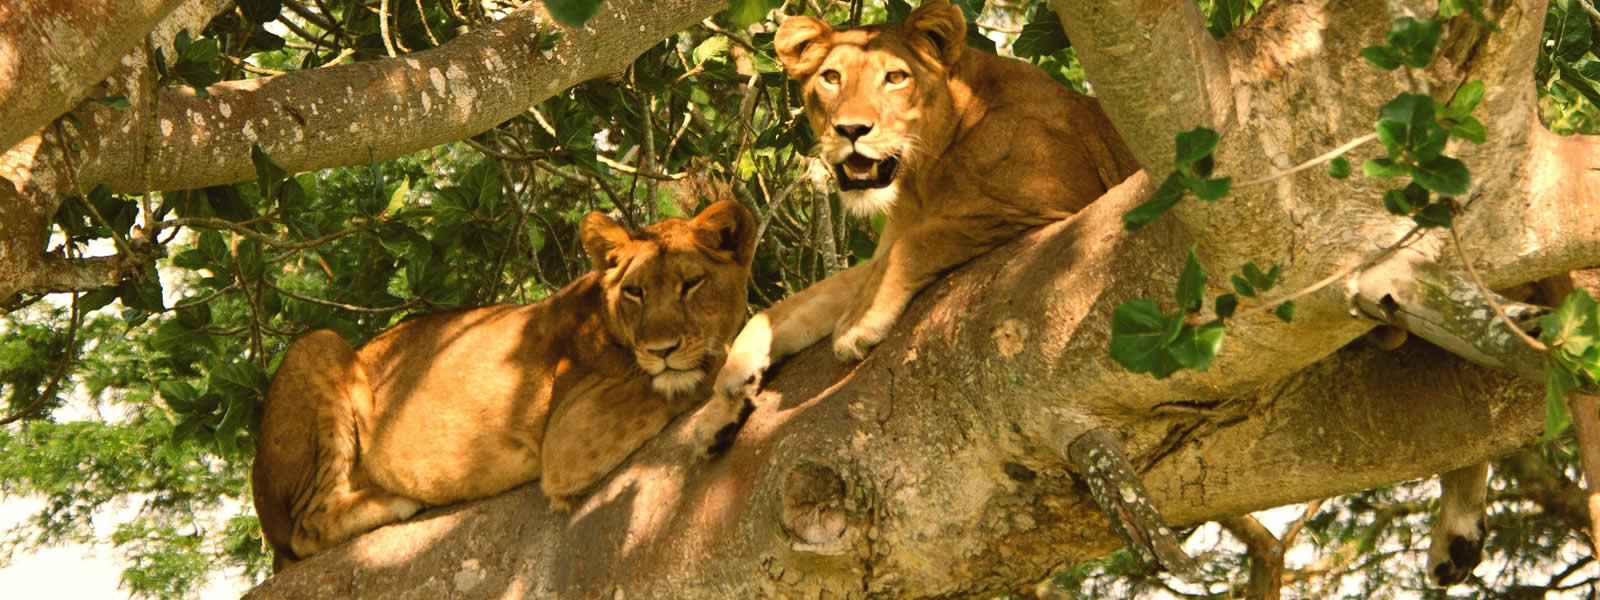 Filming in Queen Elizabeth National Park - Realm Africa safaris